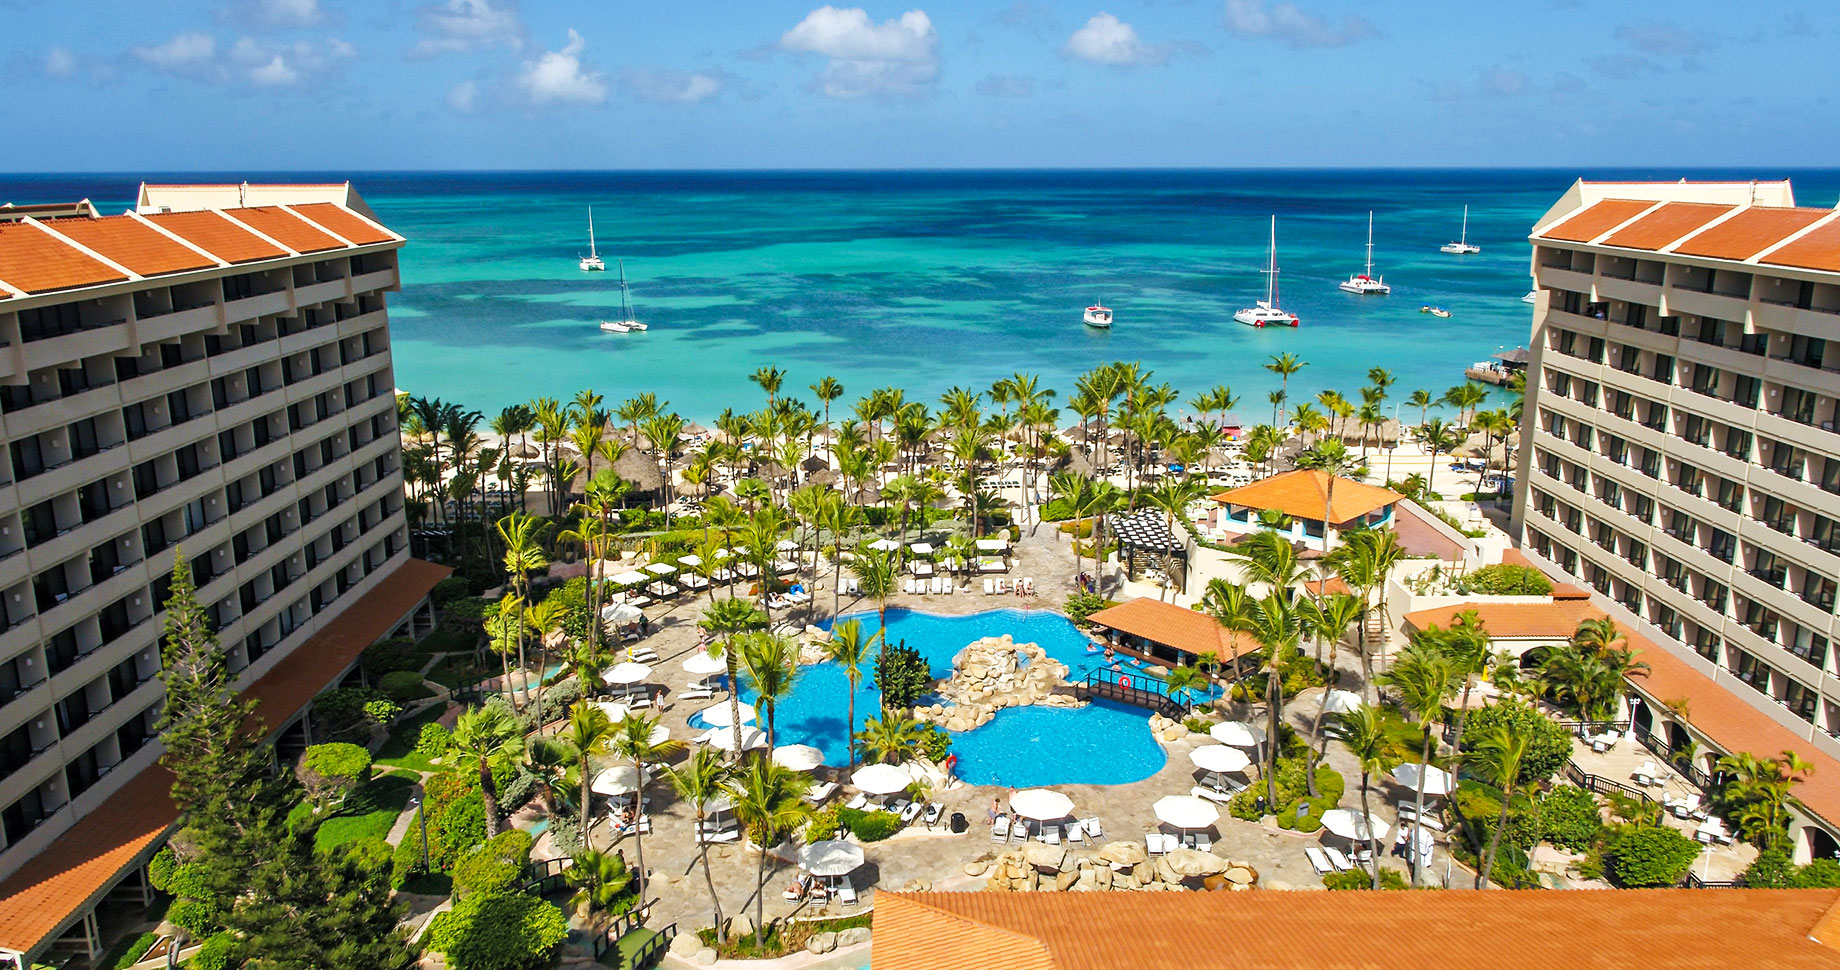 Barceló Aruba - Palm Beach, Aruba